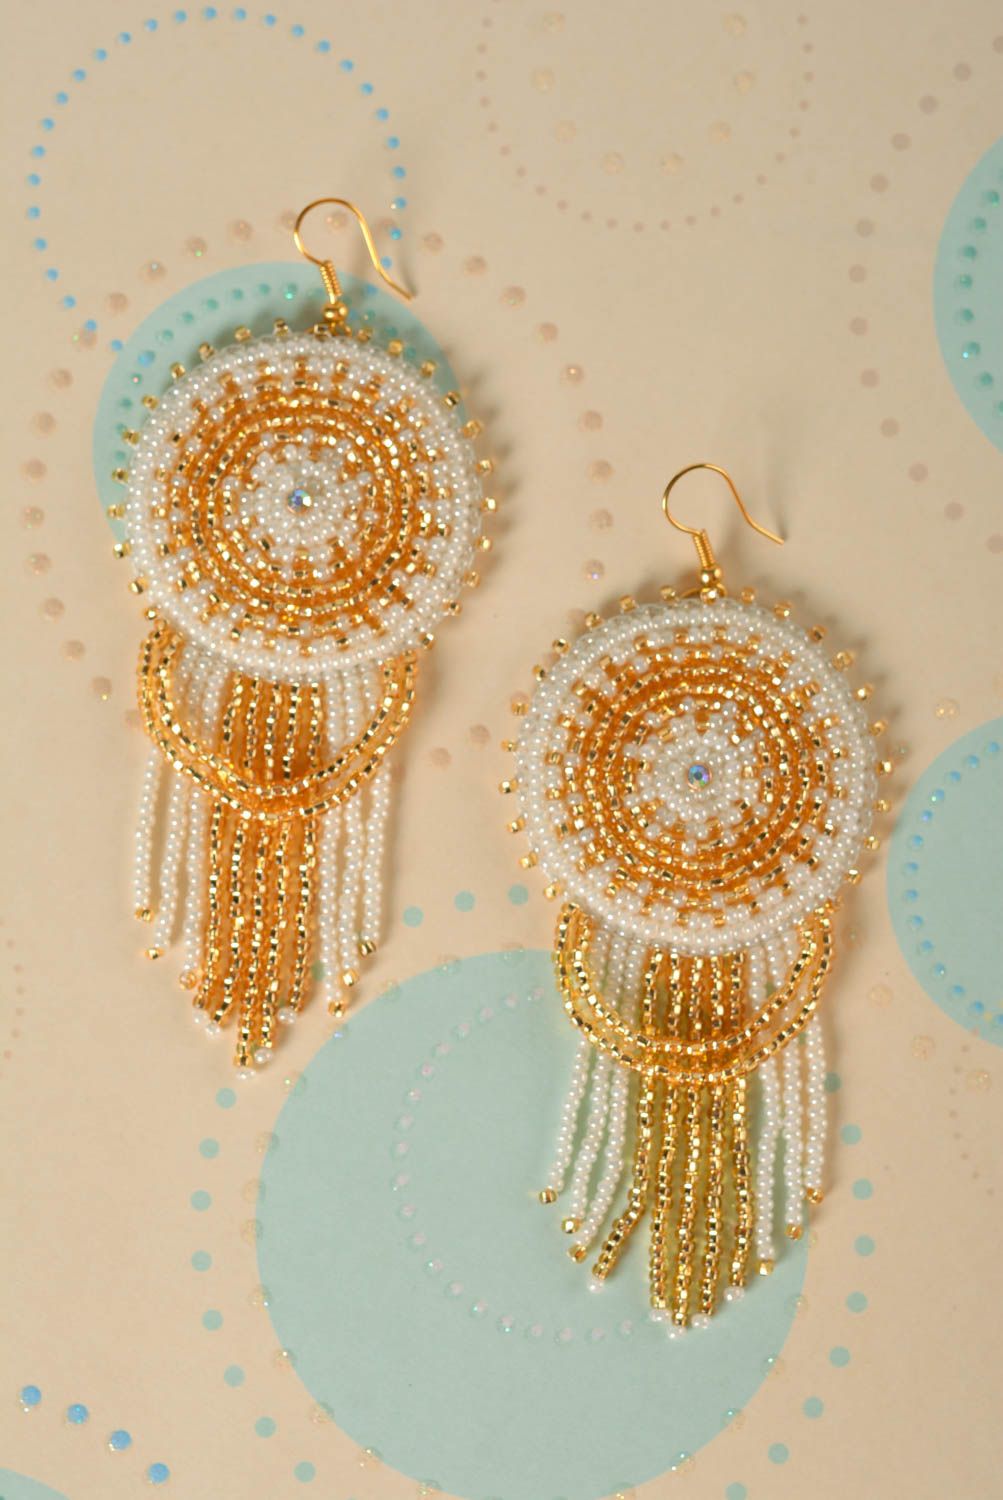 Handmade earrings designer earrings beaded earrings beads accessory unusual gift photo 1